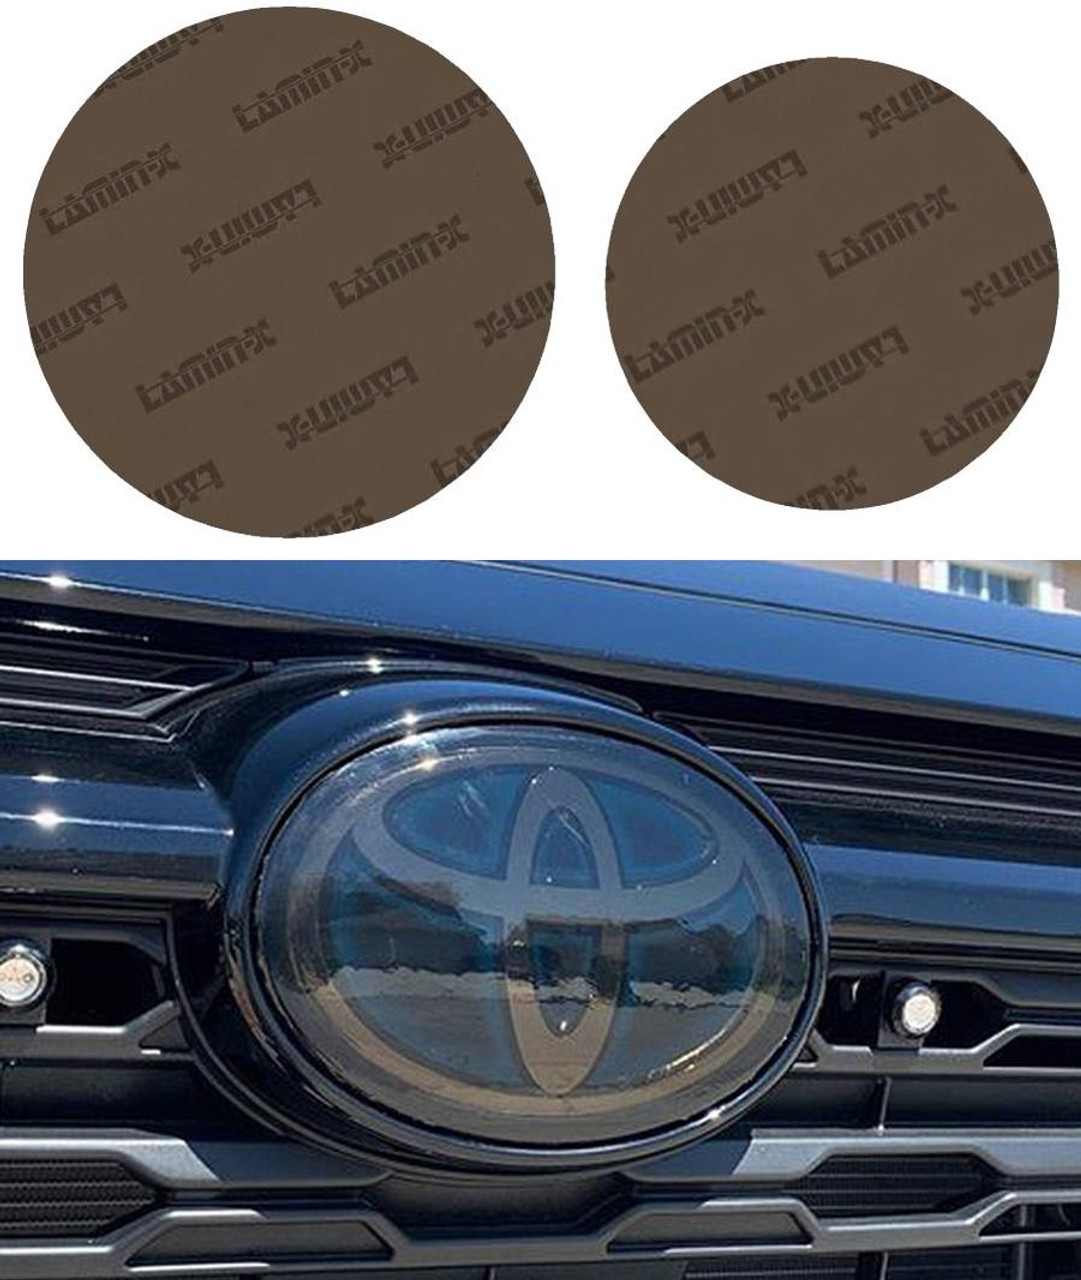 VW Classic Badge Adhesive Vinyl Sticker